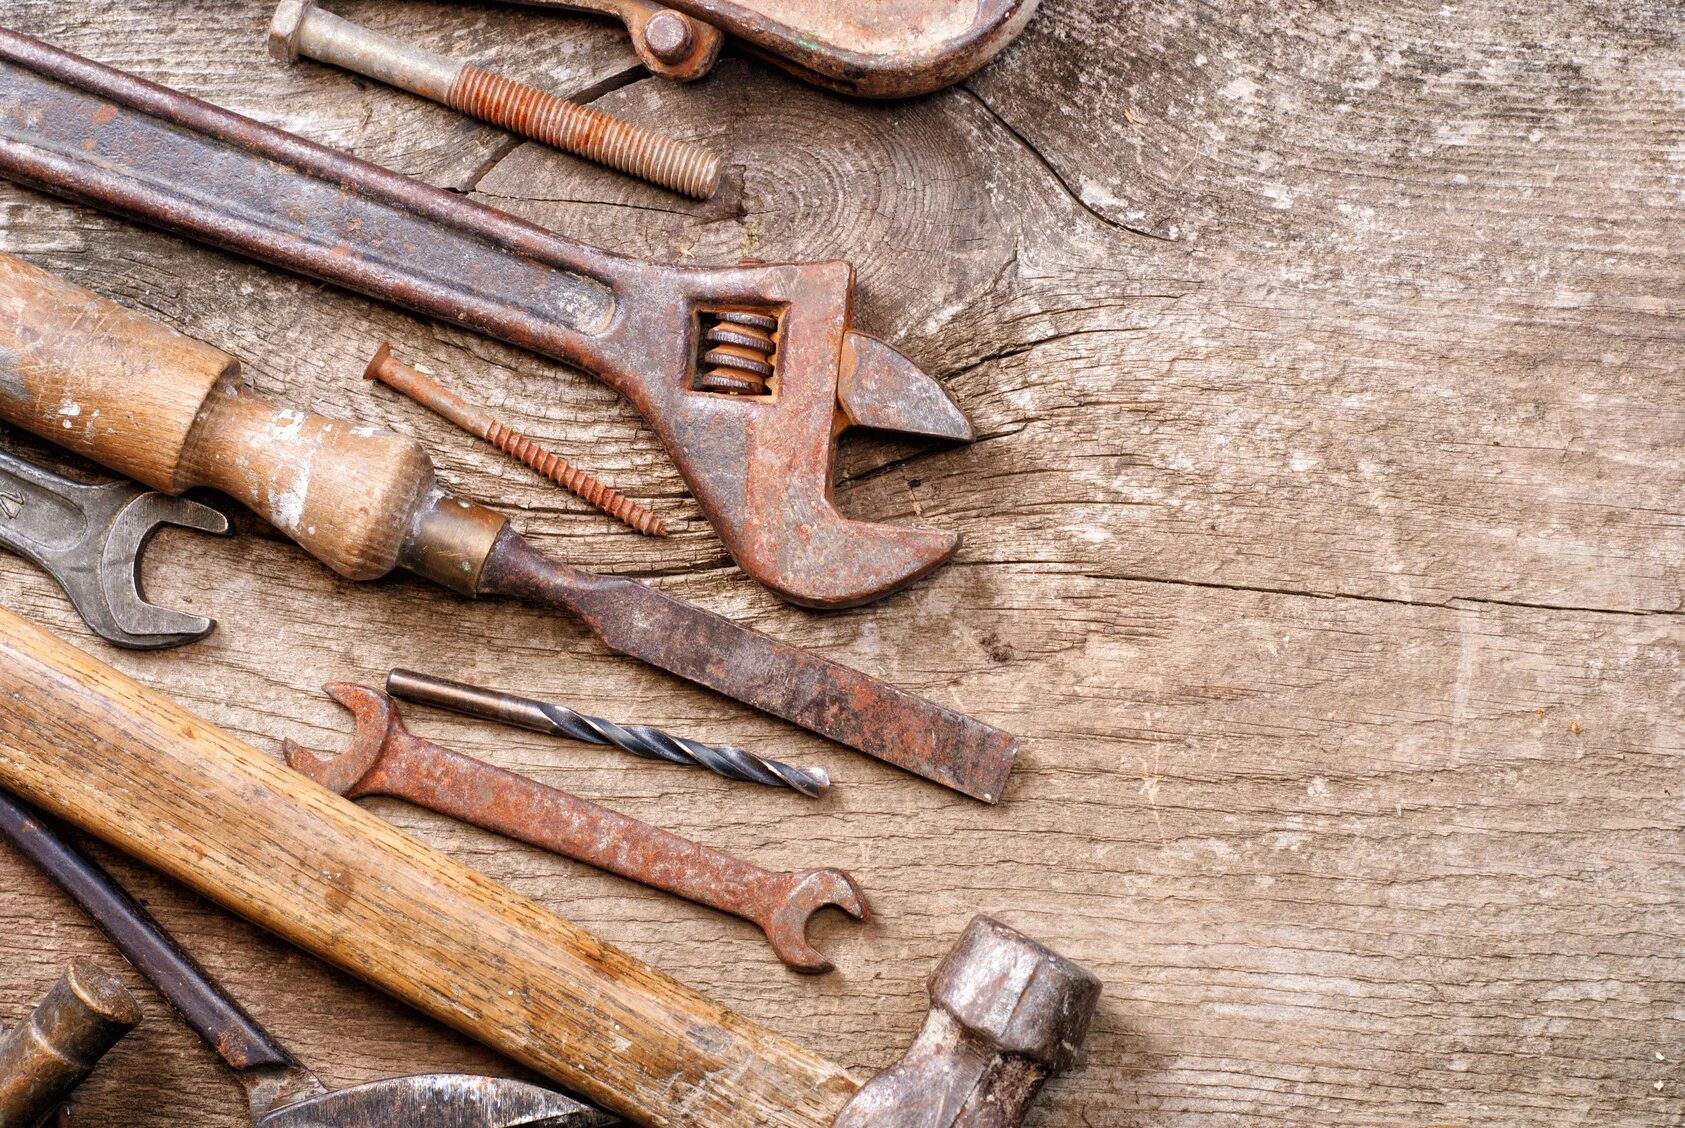 Rust tools. Старые инструменты. Ржавые инструменты. Старинные железные инструменты. Старинный металлический инструмент.